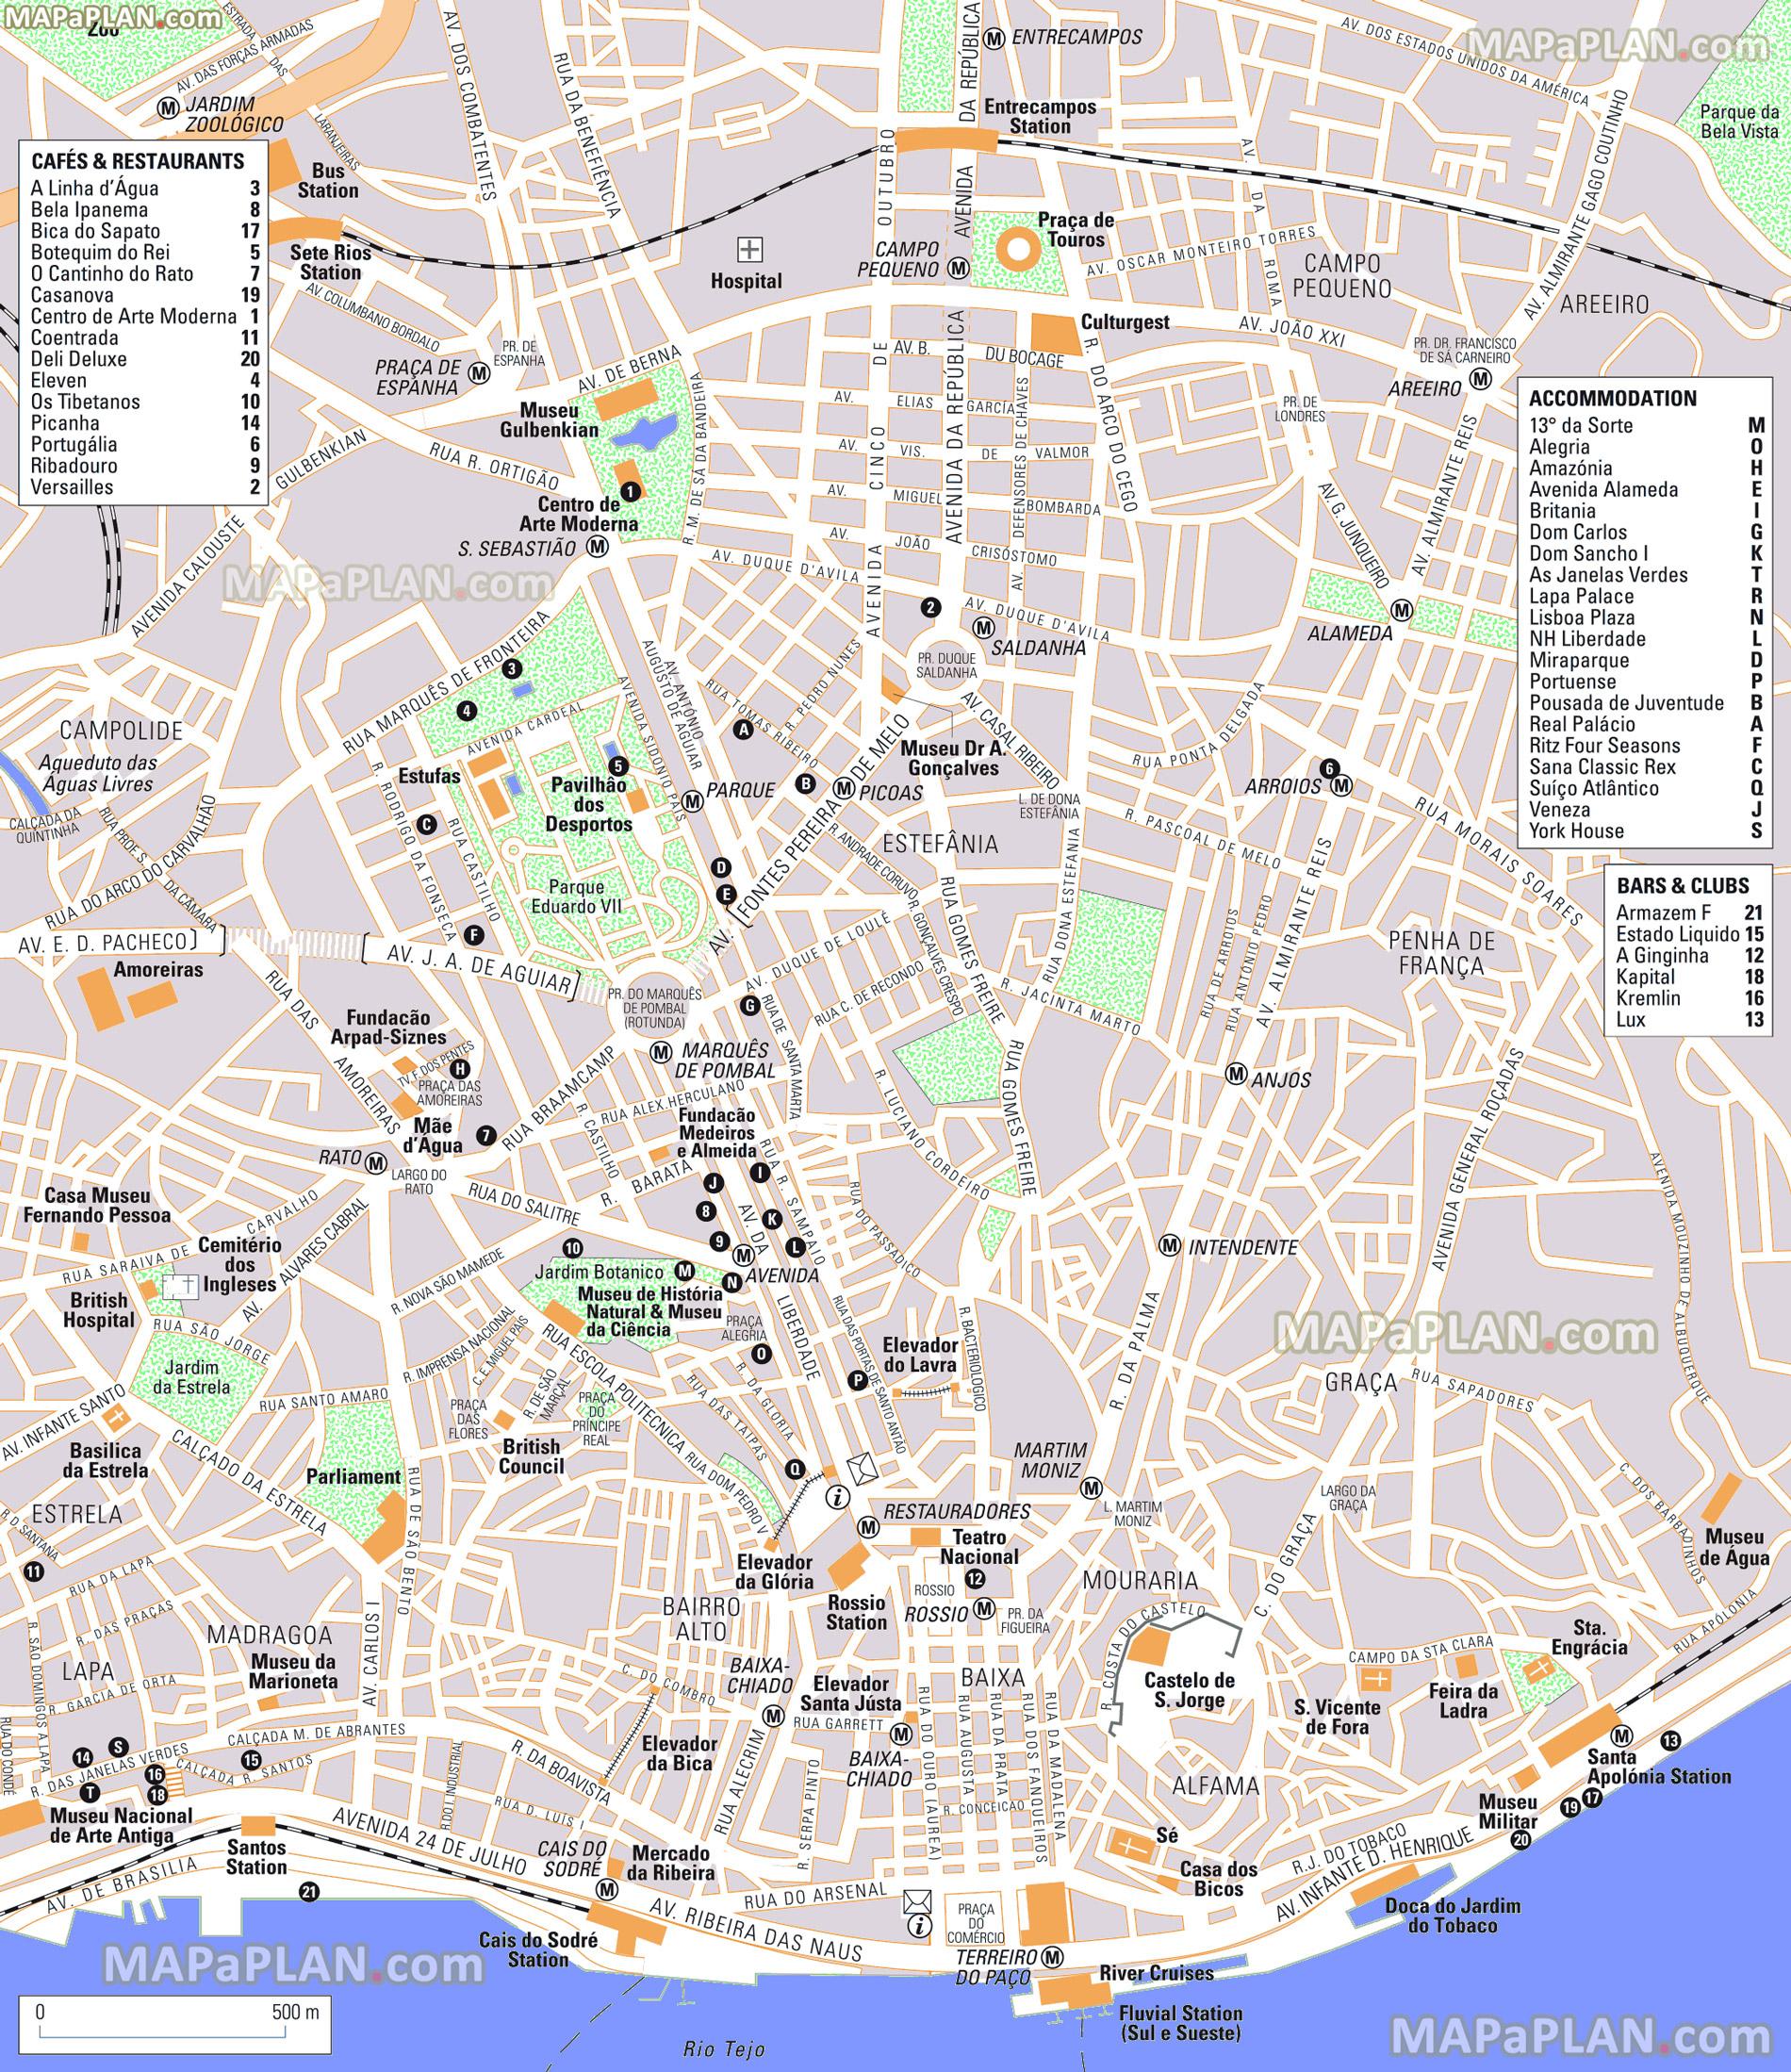 lisbon tourist attractions map pdf